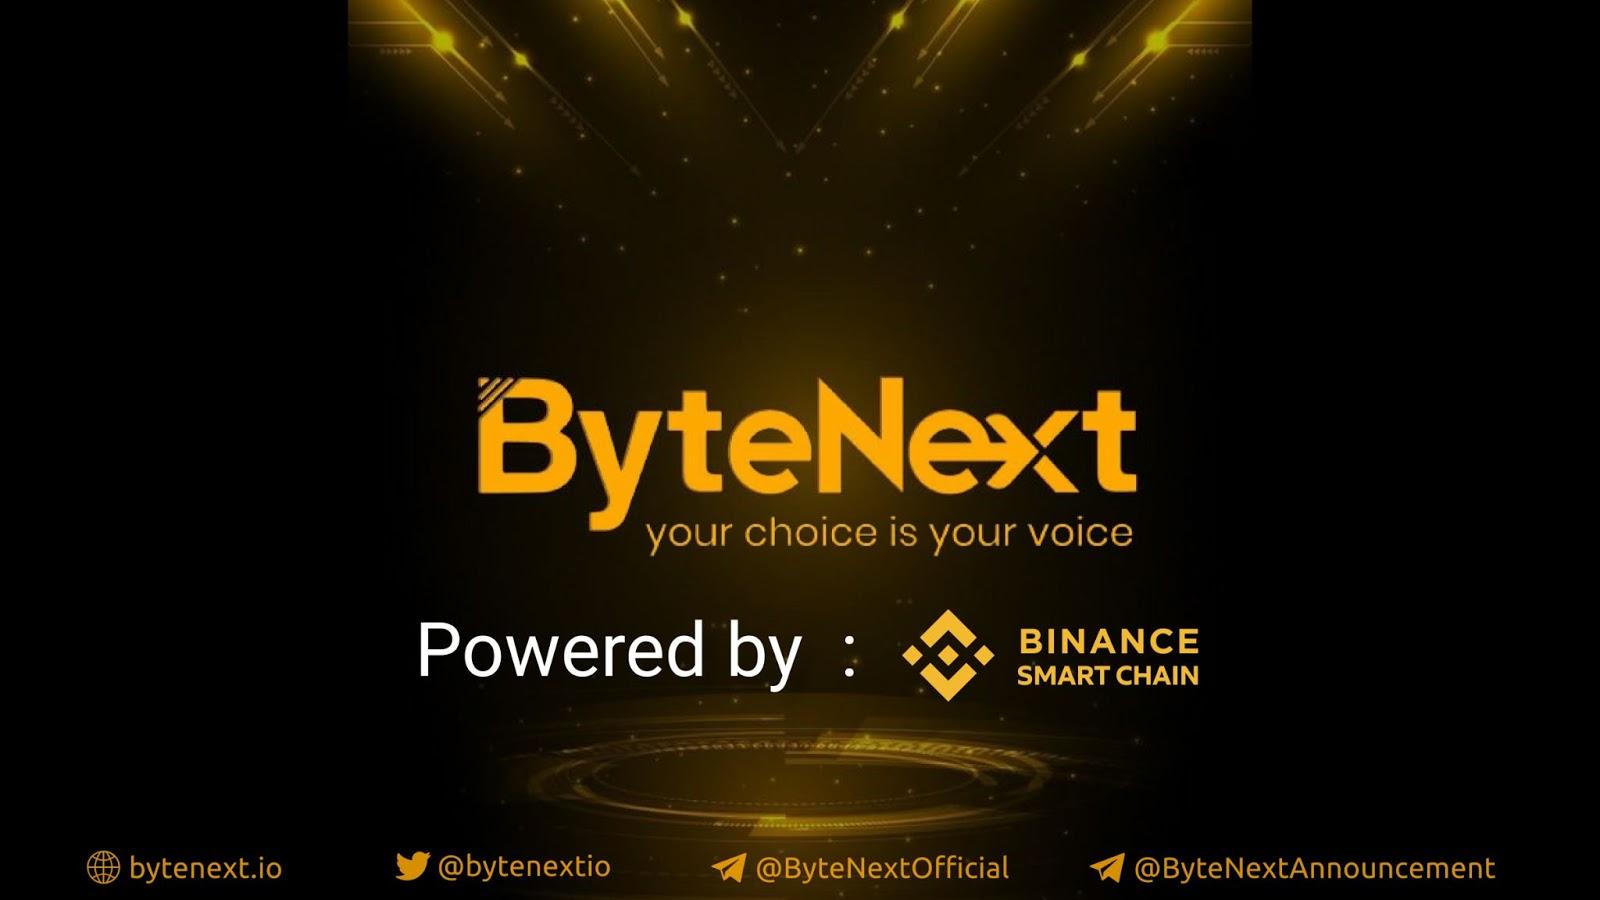 ByteNext launches AvatarArt